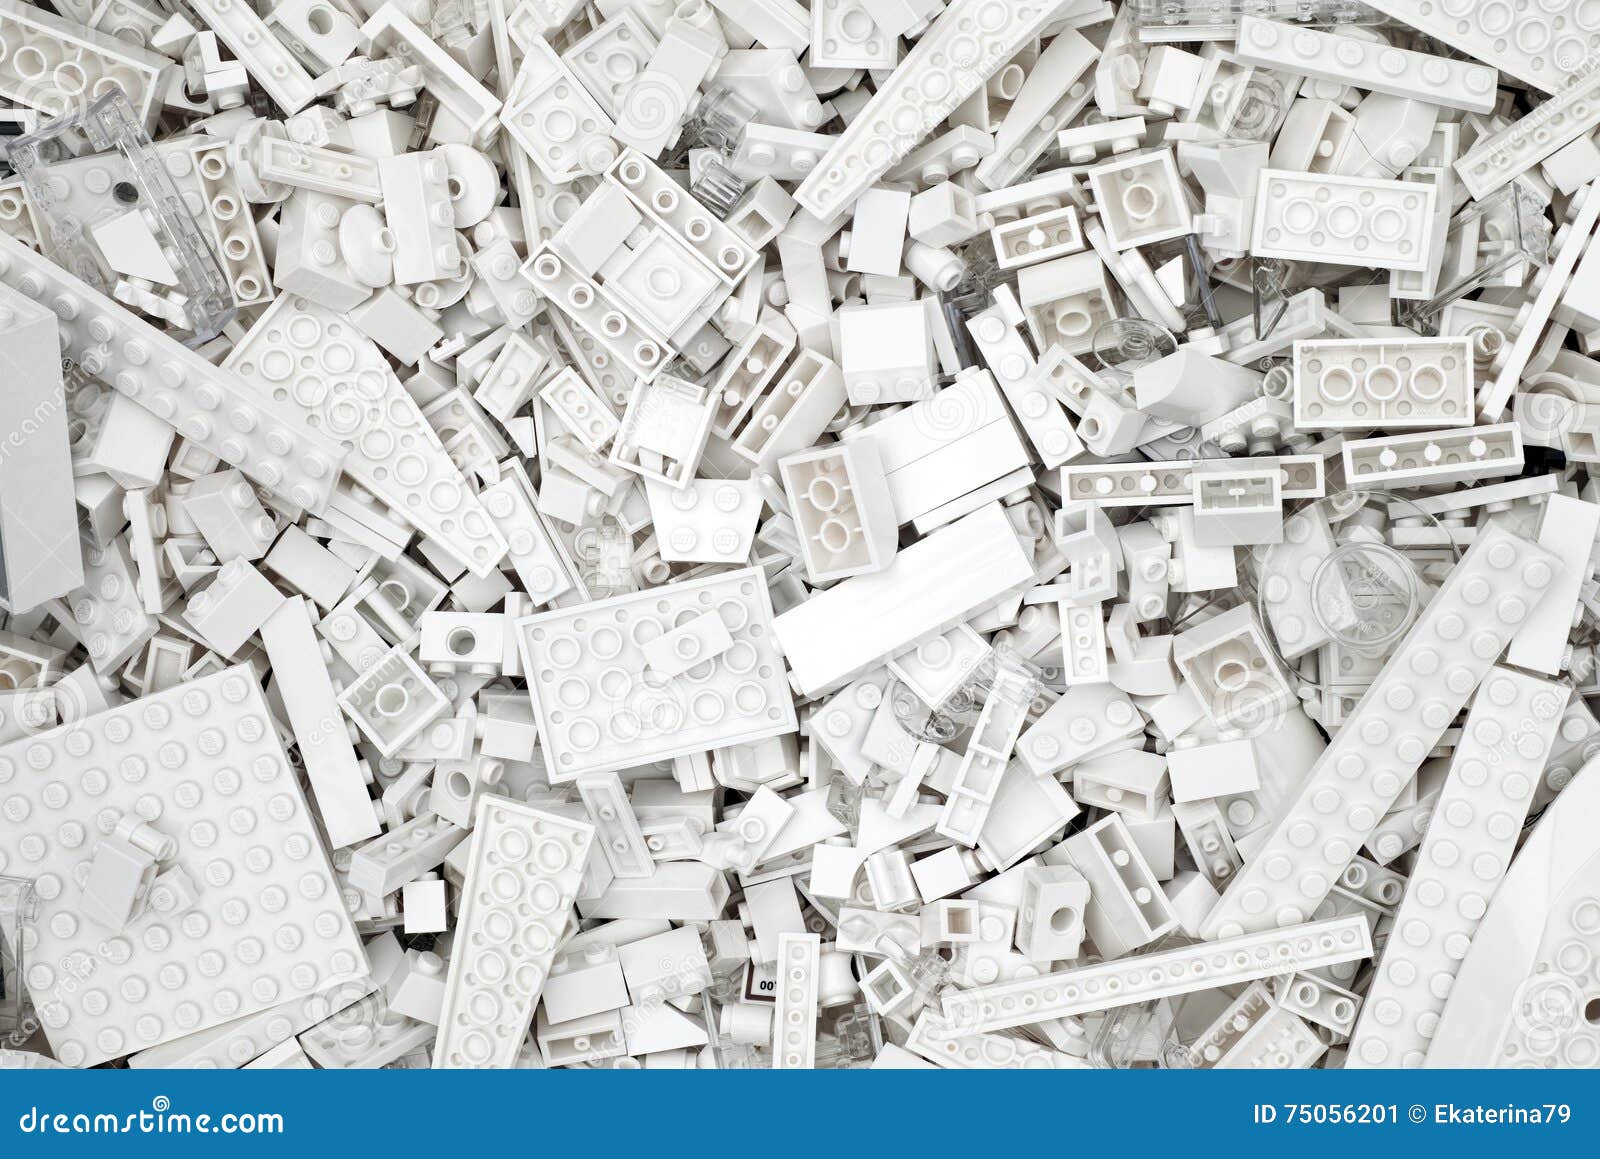 White Lego Blocks, Bricks And Pieces Editorial Photo ...